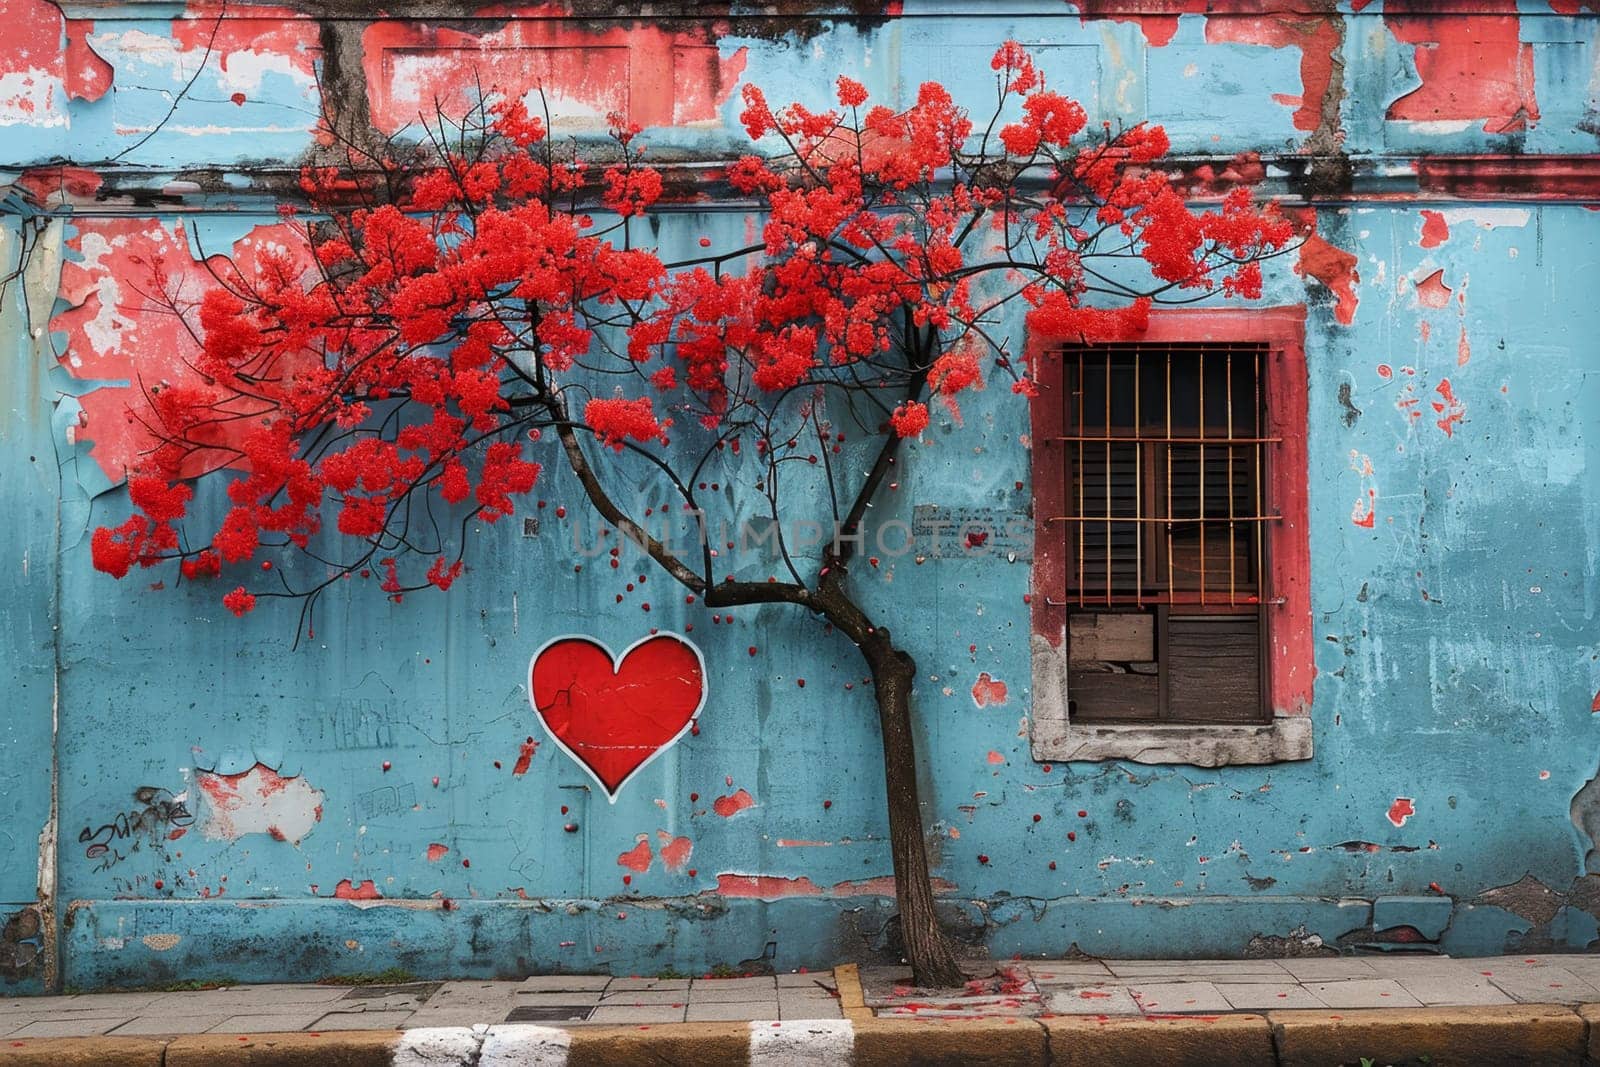 Feliz Dia Dos Namorados - Happy Valentine's Day in Brazilian Portuguese. Red loving hearts dedicated to the holiday in Brazil on June 12th.